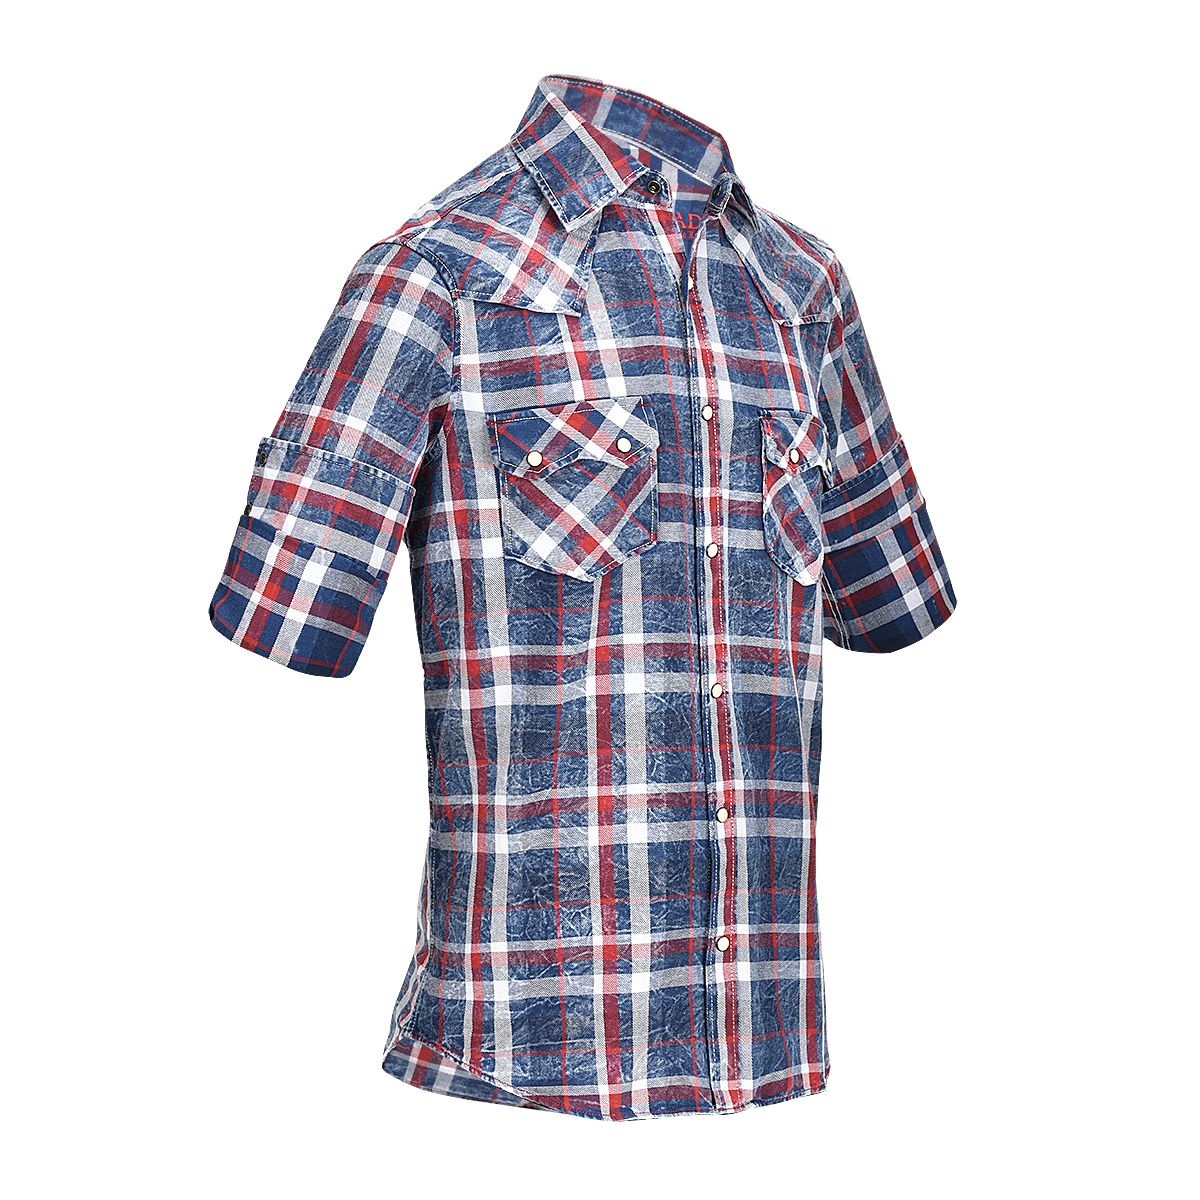 CMRJ450 - Cuadra navy-red cowboy fashion cotton shirt for men-Kuet.us